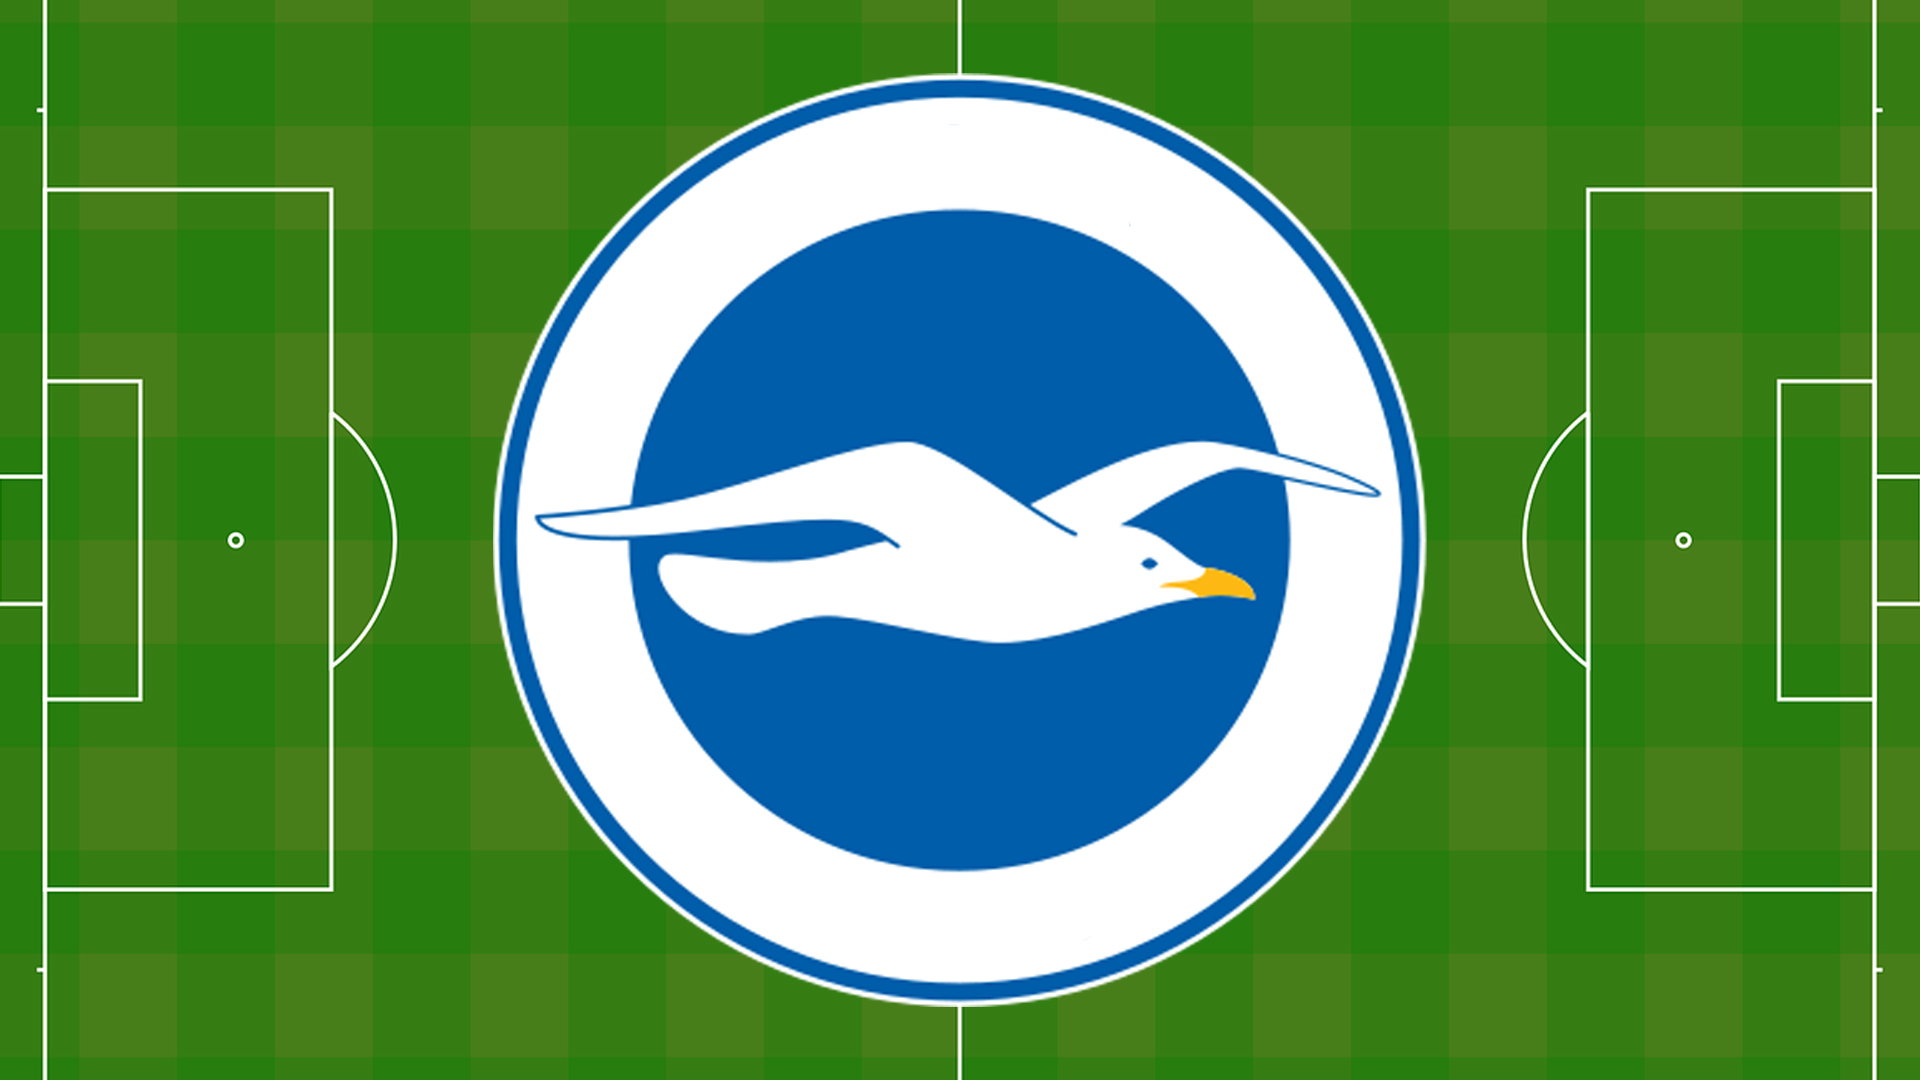 Football badge featuring a seagull